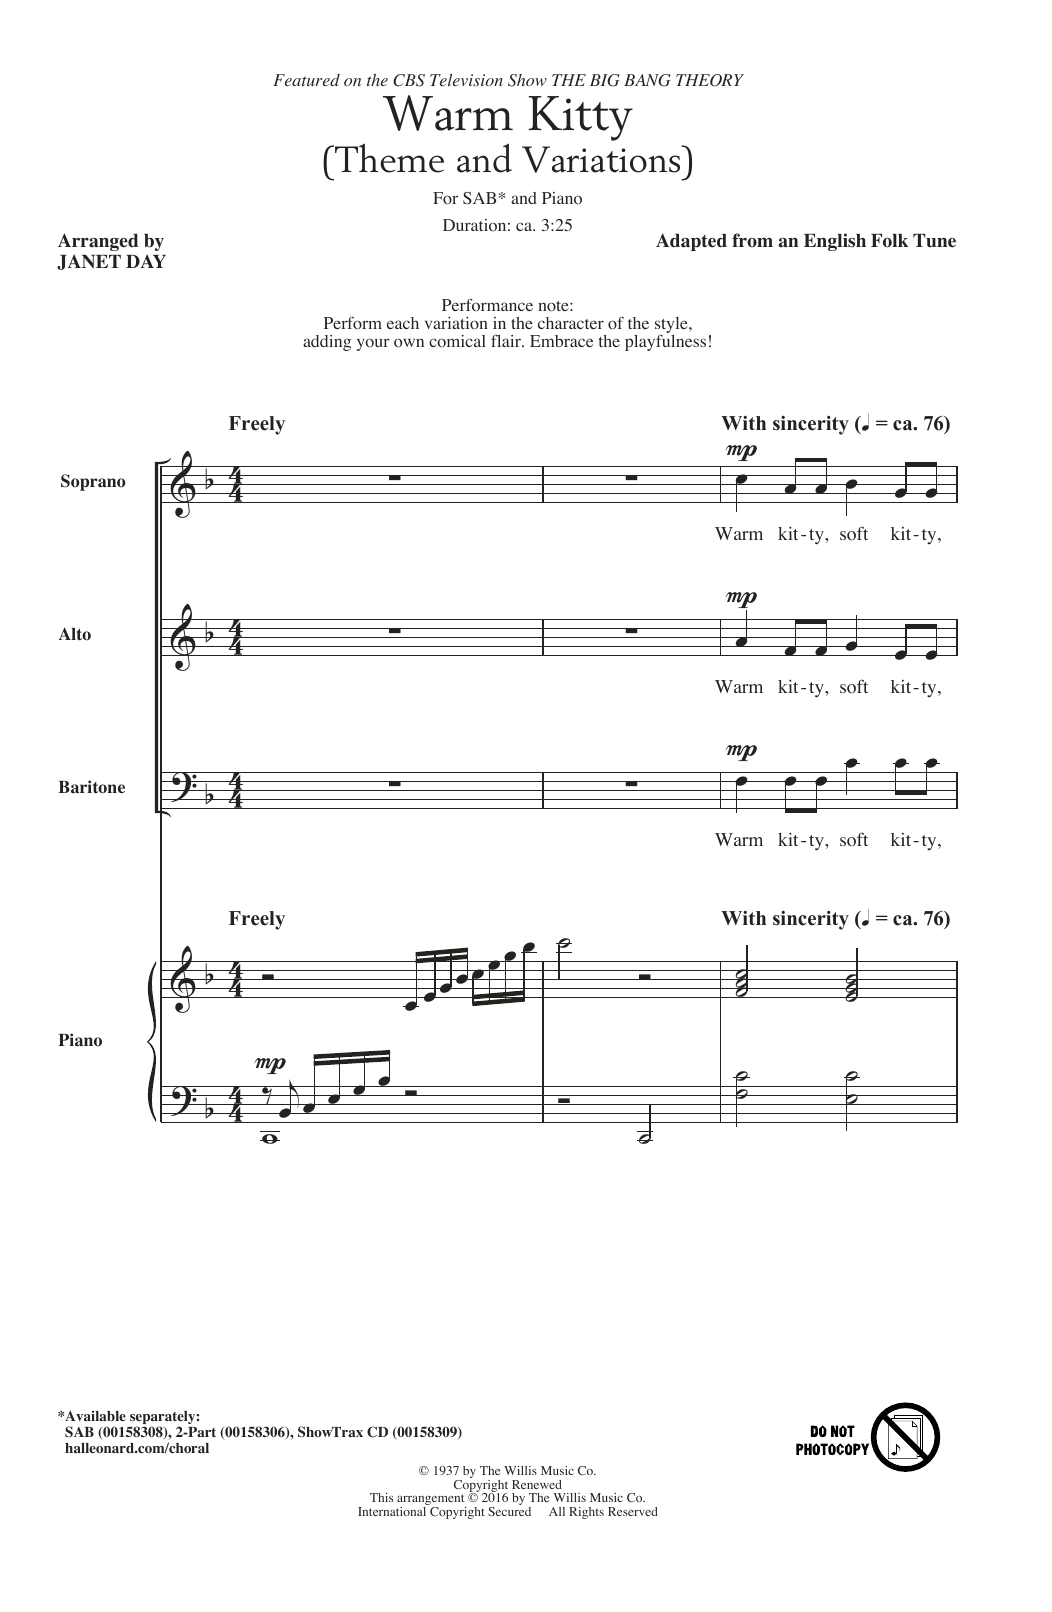 Edith Newlin Warm Kitty (arr. Janet Day) sheet music notes and chords arranged for SAB Choir